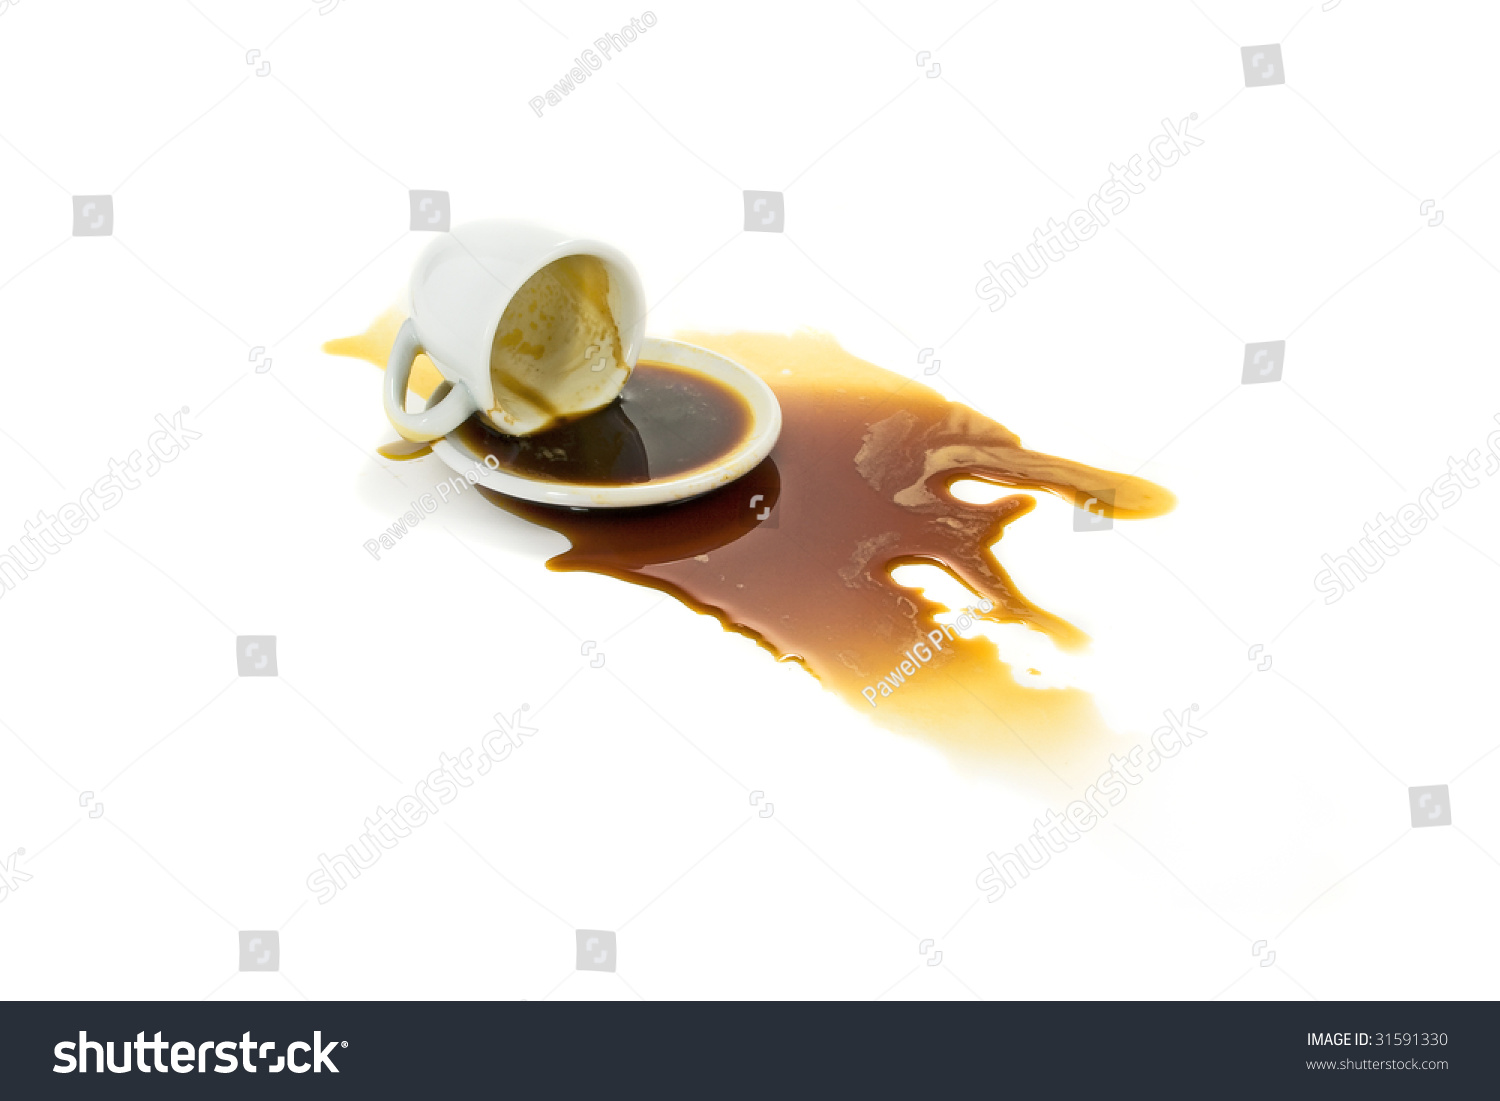 Spill Coffee on the Floor